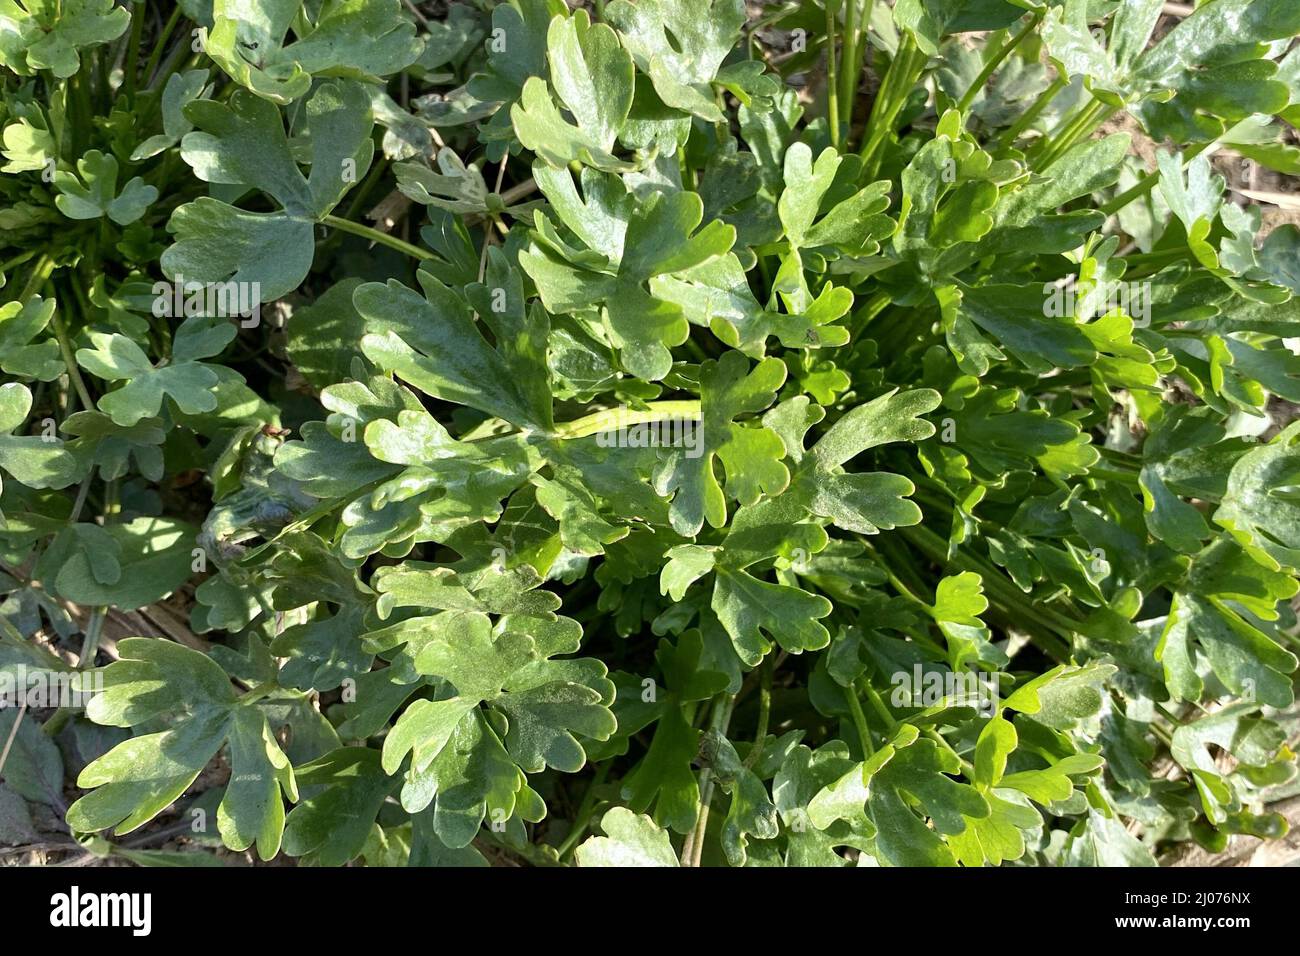 Lush green leaves of Ranunculus sceleratus (Celery-leaved buttercup, cursed buttercup) plant Stock Photo